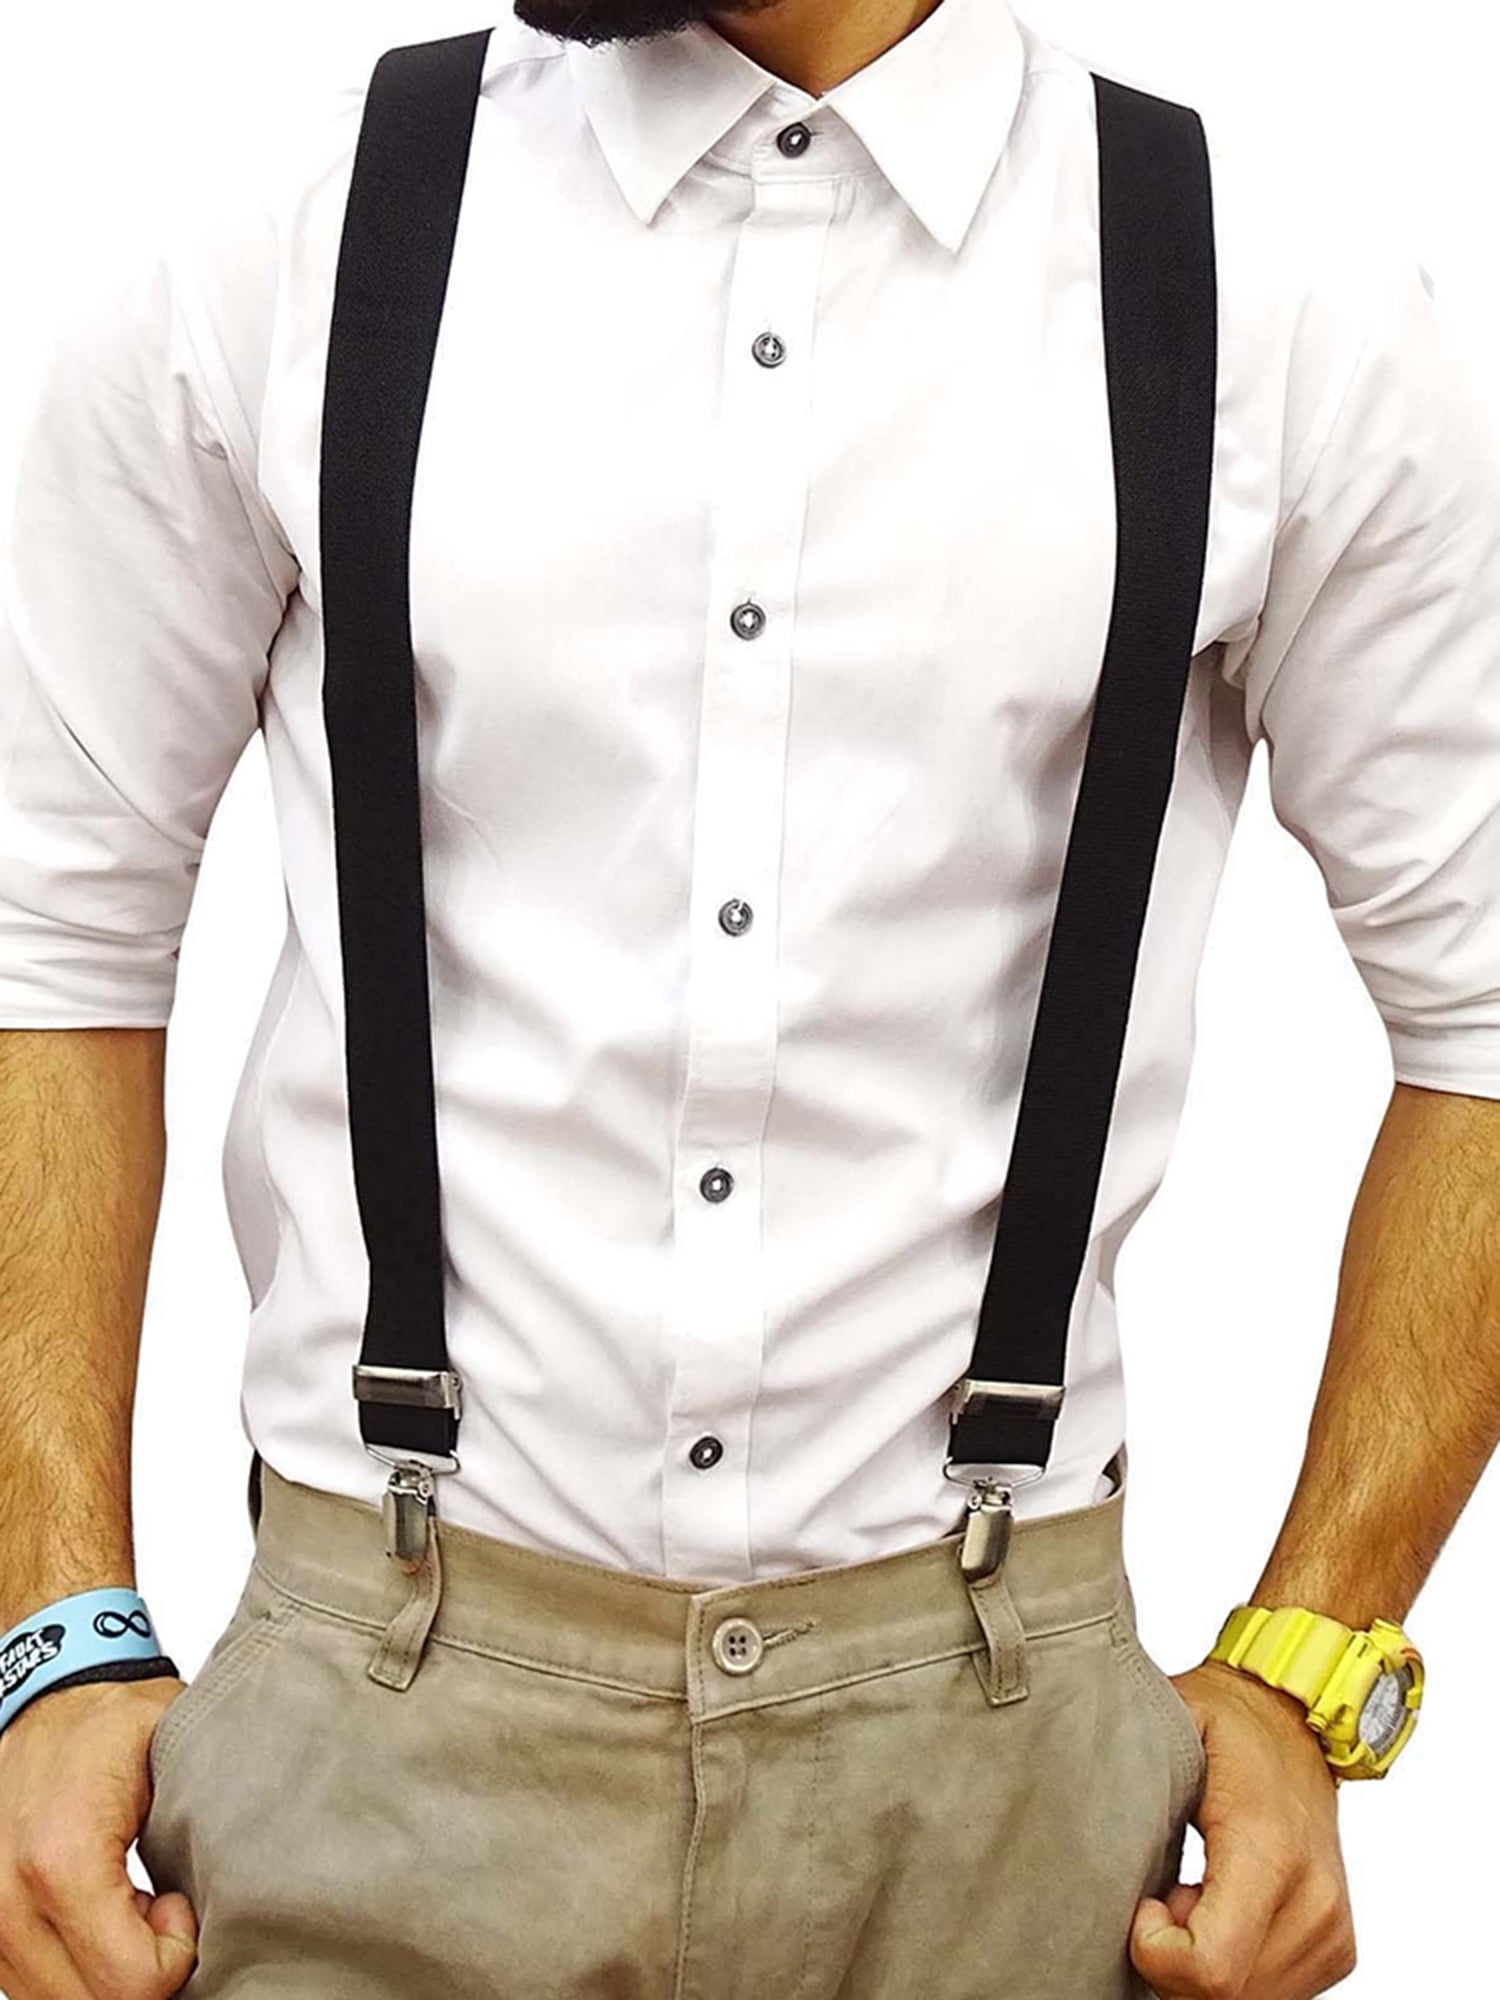 New in box Men's Suspender Leopard White Black elastic braces clips buttons 